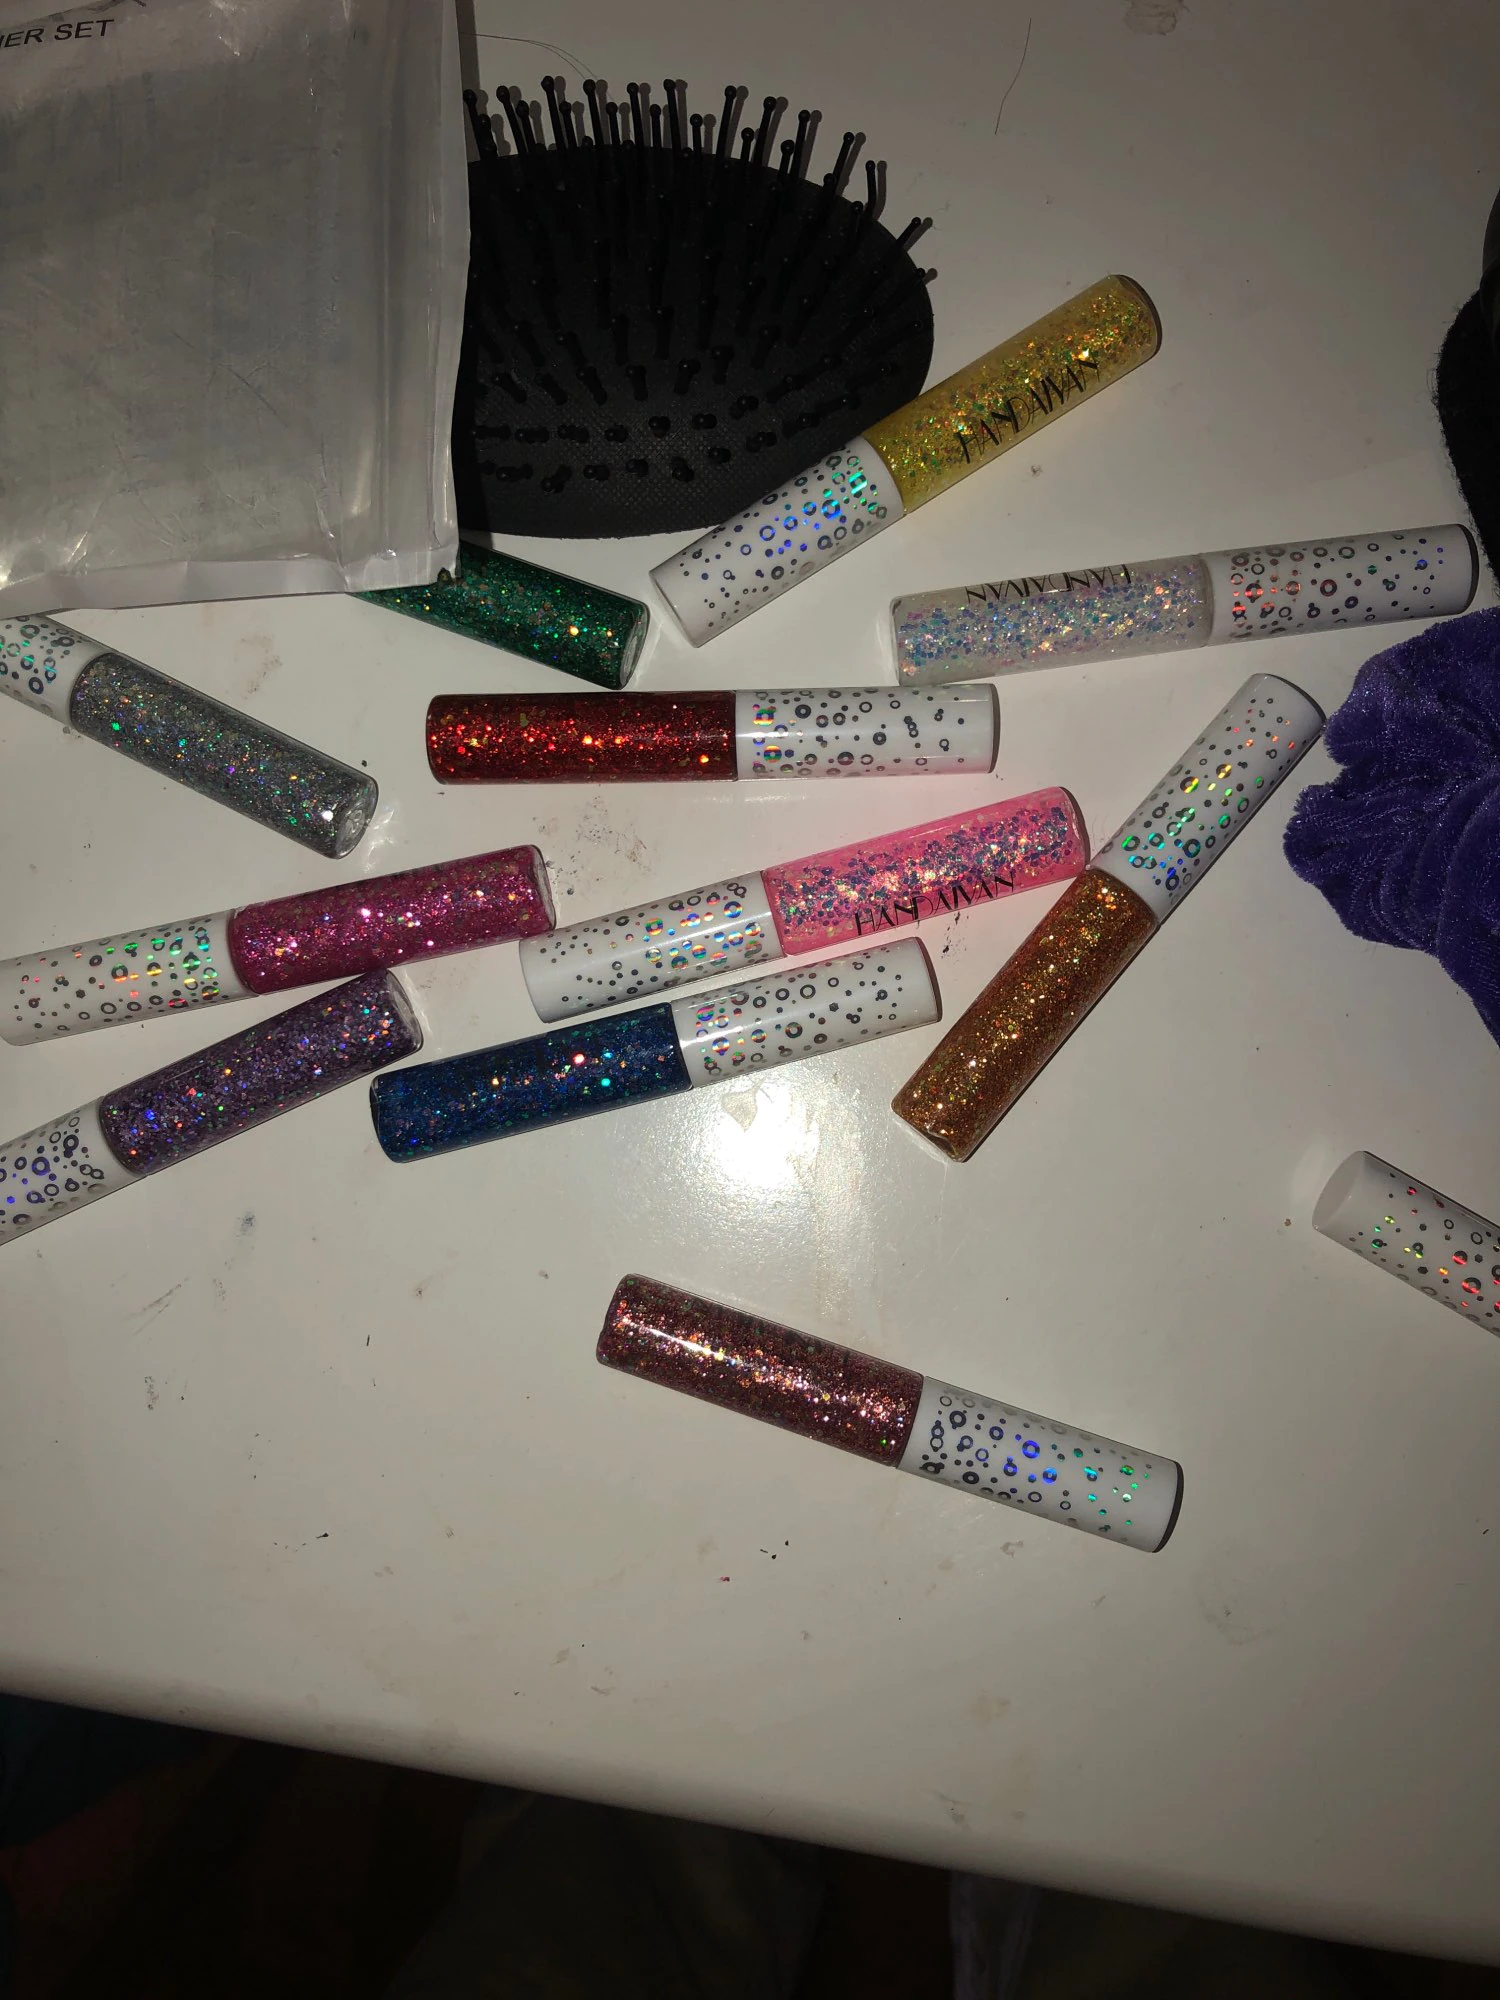 Set of 12 Glitter colors eyeliner